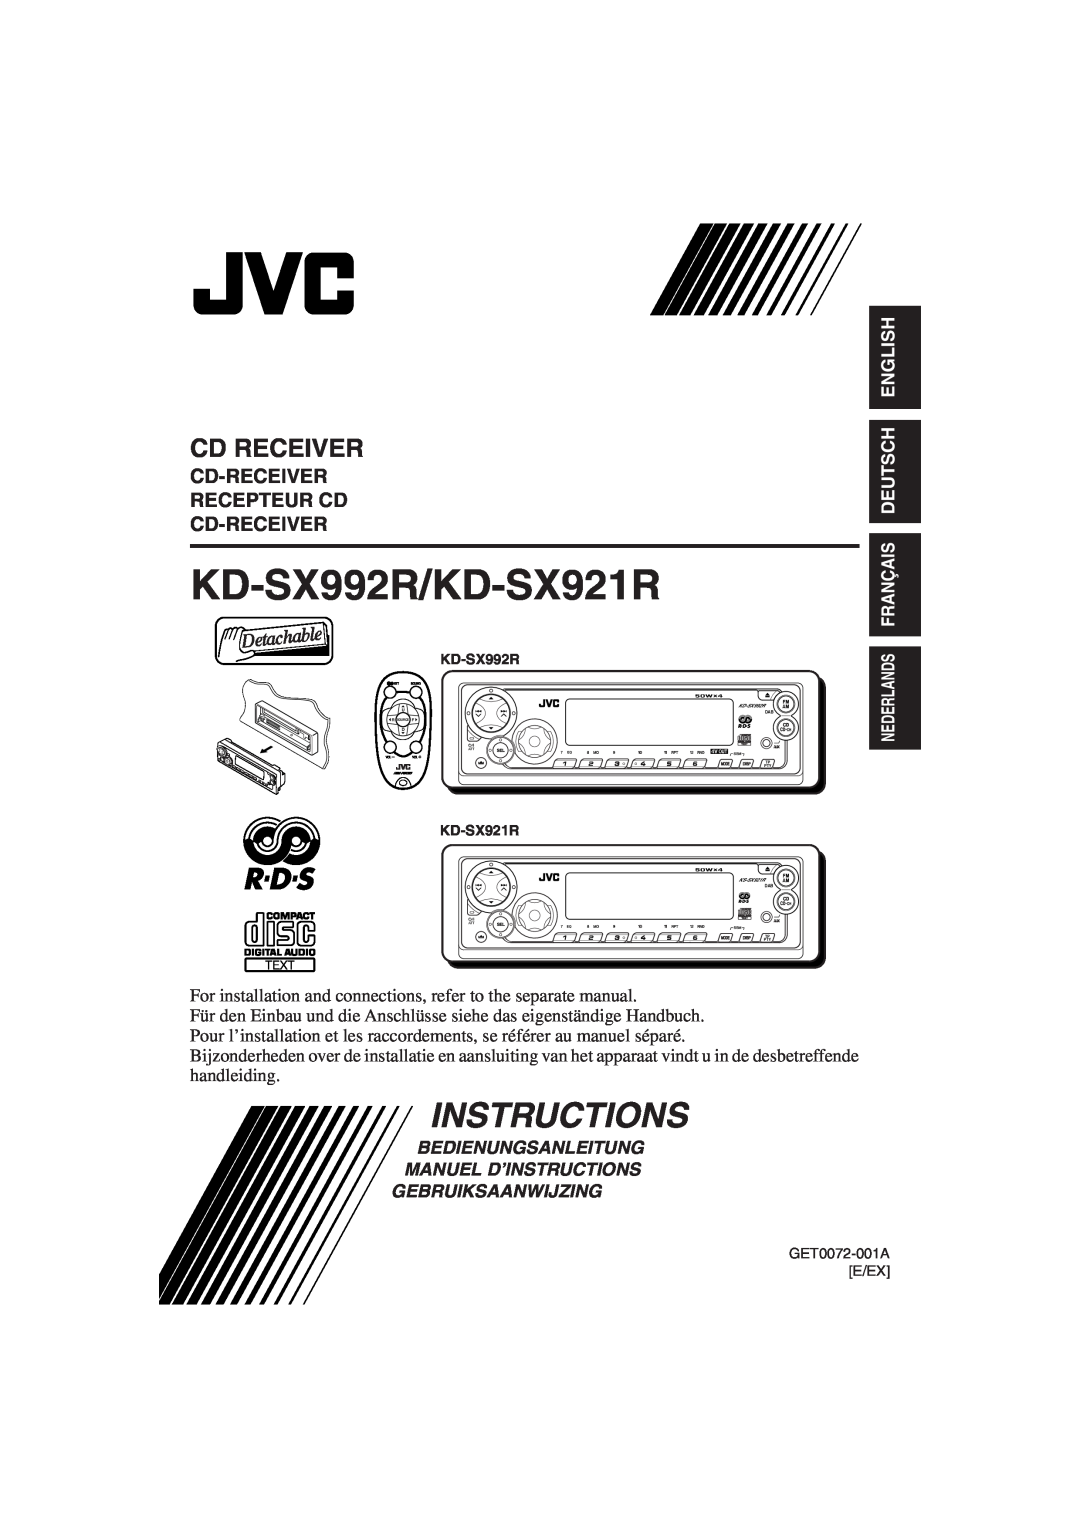 JVC manual Cd Receiver, Cd-Receiver Recepteur Cd Cd-Receiver, English Deutsch, KD-SX992R/KD-SX921R, Instructions 